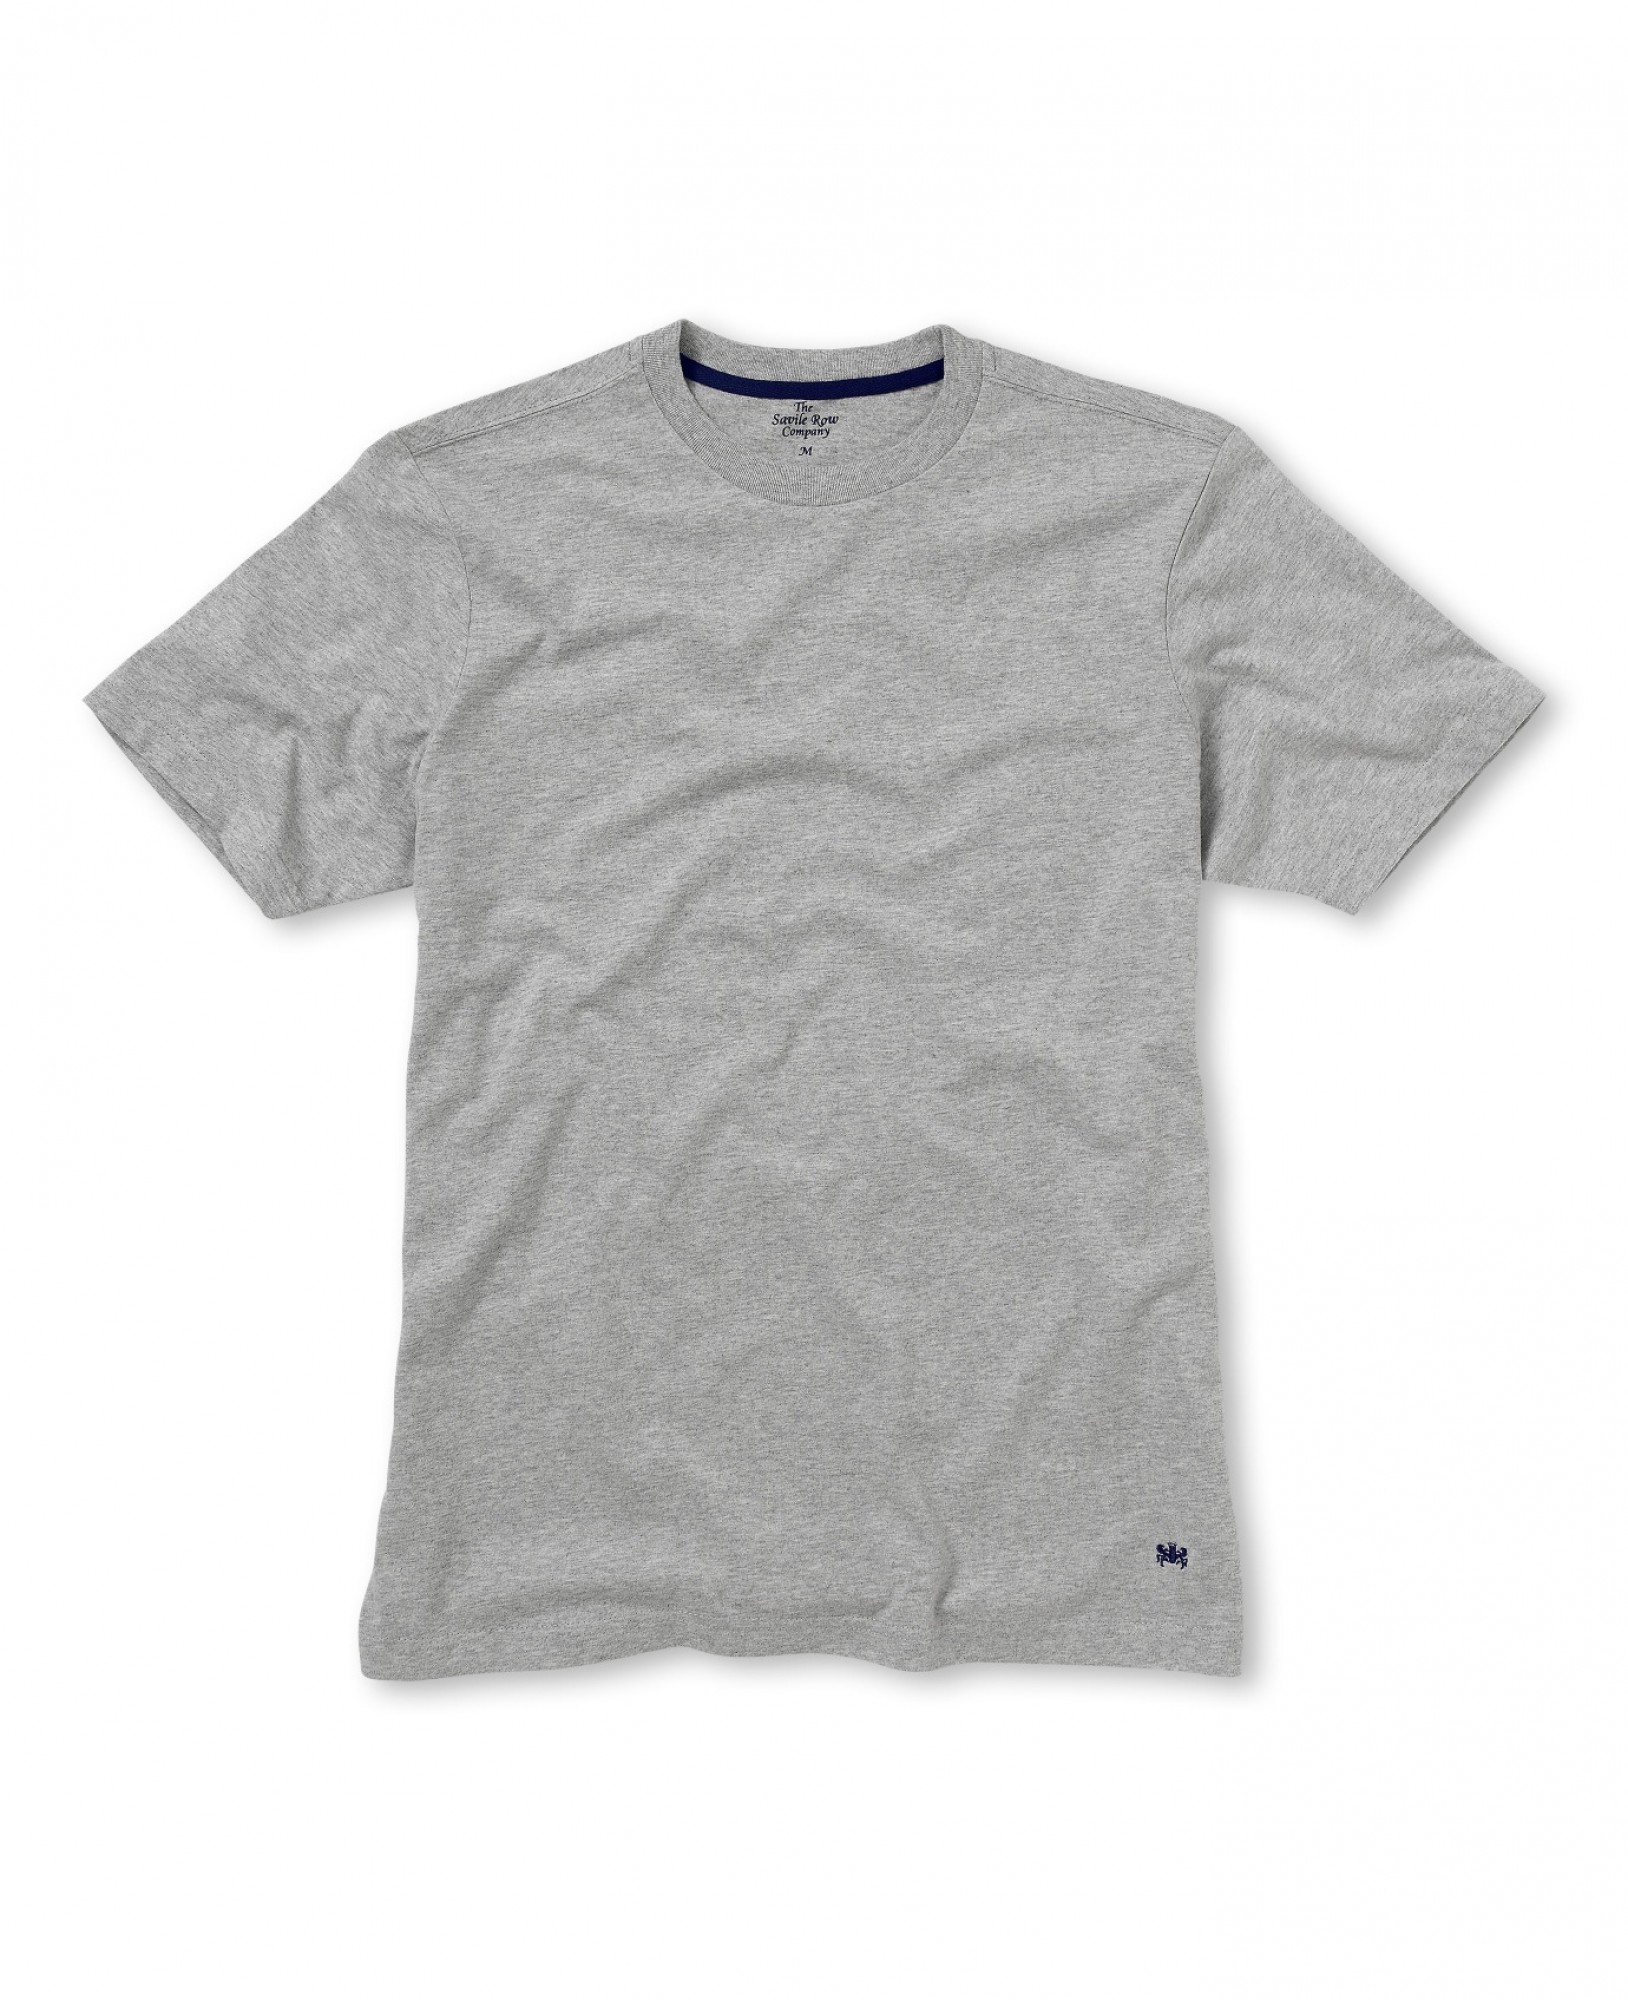 Grey Short Sleeve T-Shirt S